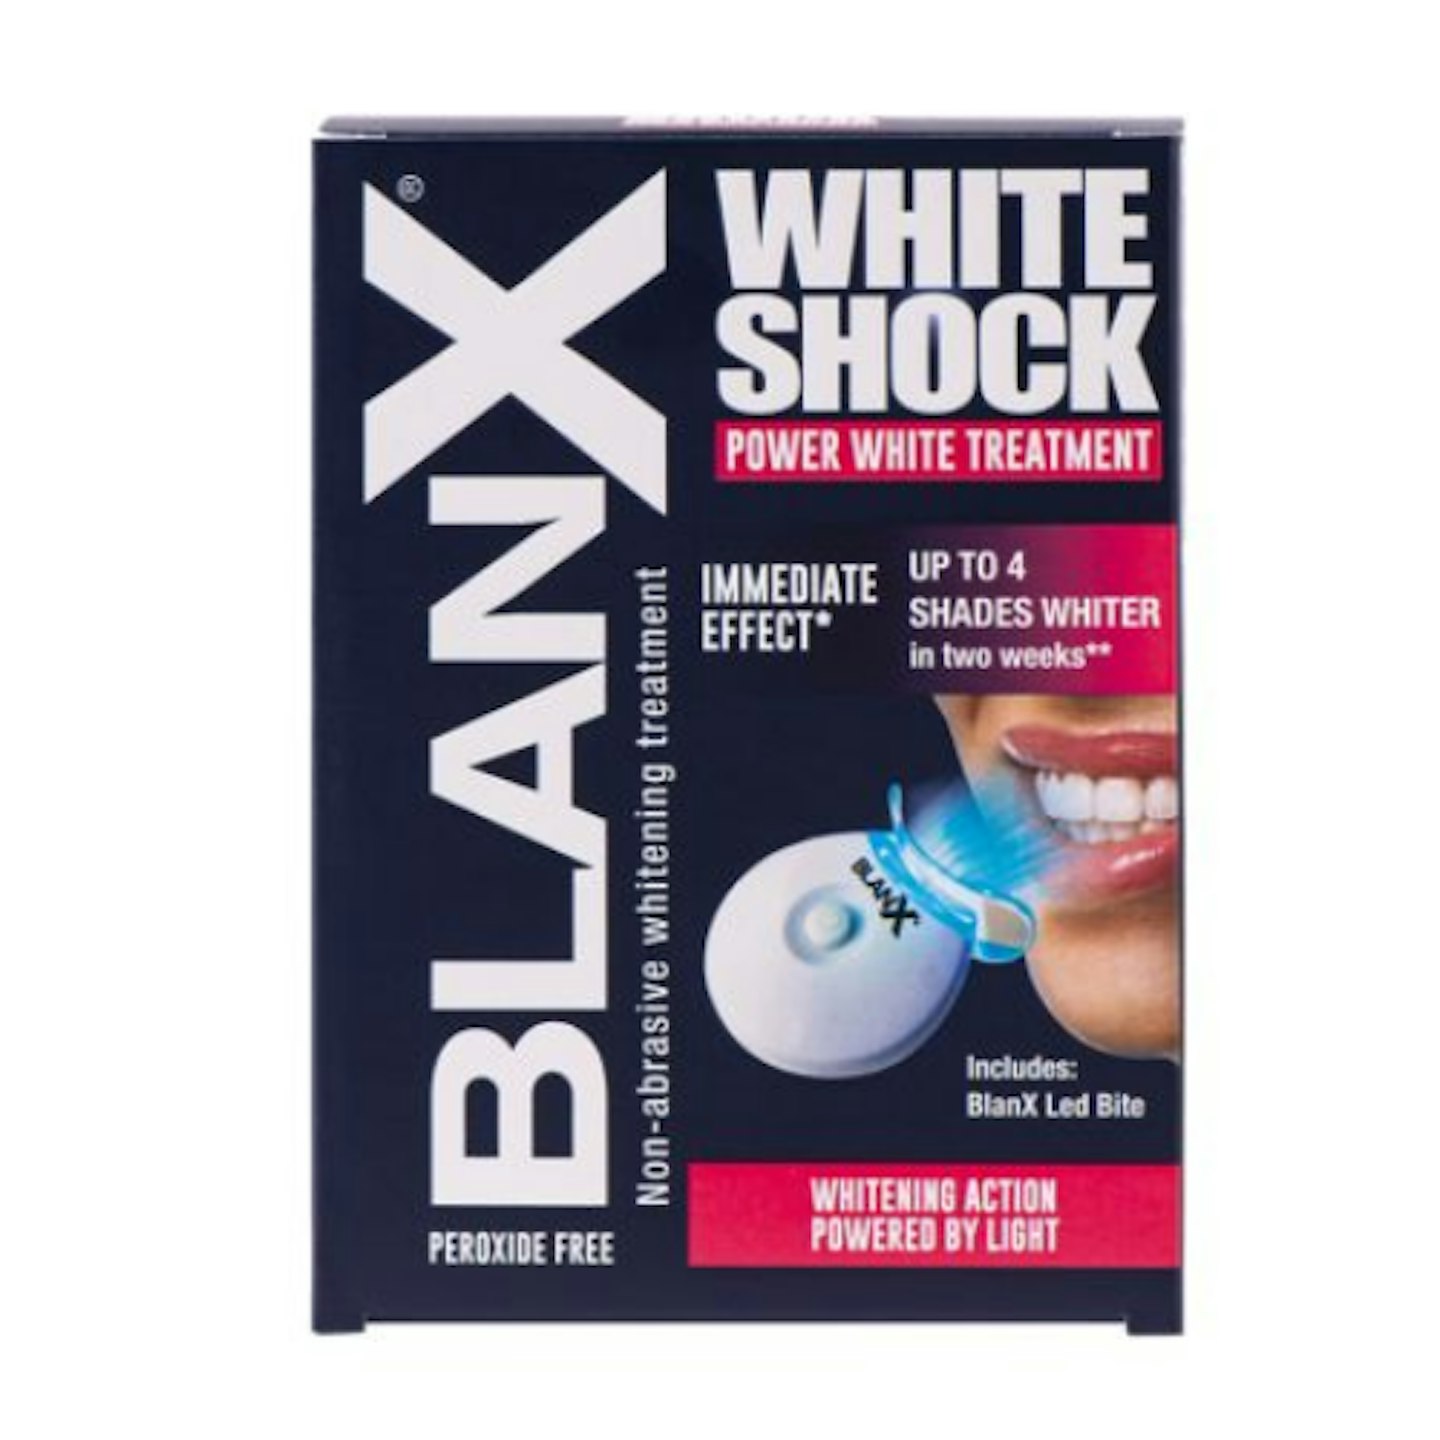 BlanX White Shock Power White Treatment